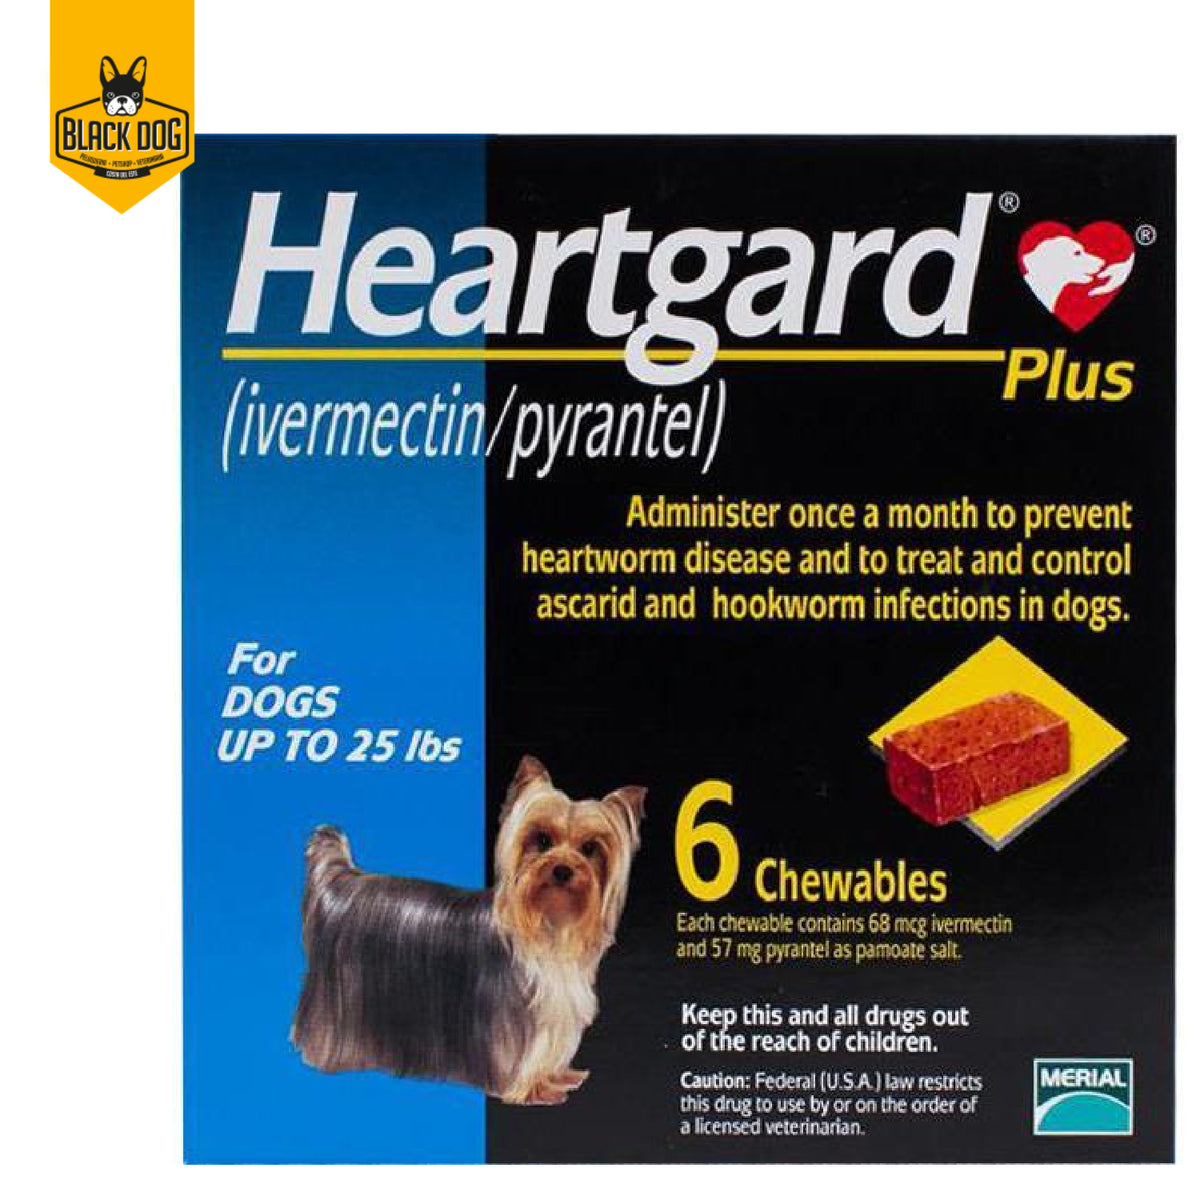 HEARTGARD | Ivermectina - Pirantel | Comprimido masticable - BlackDogPanama